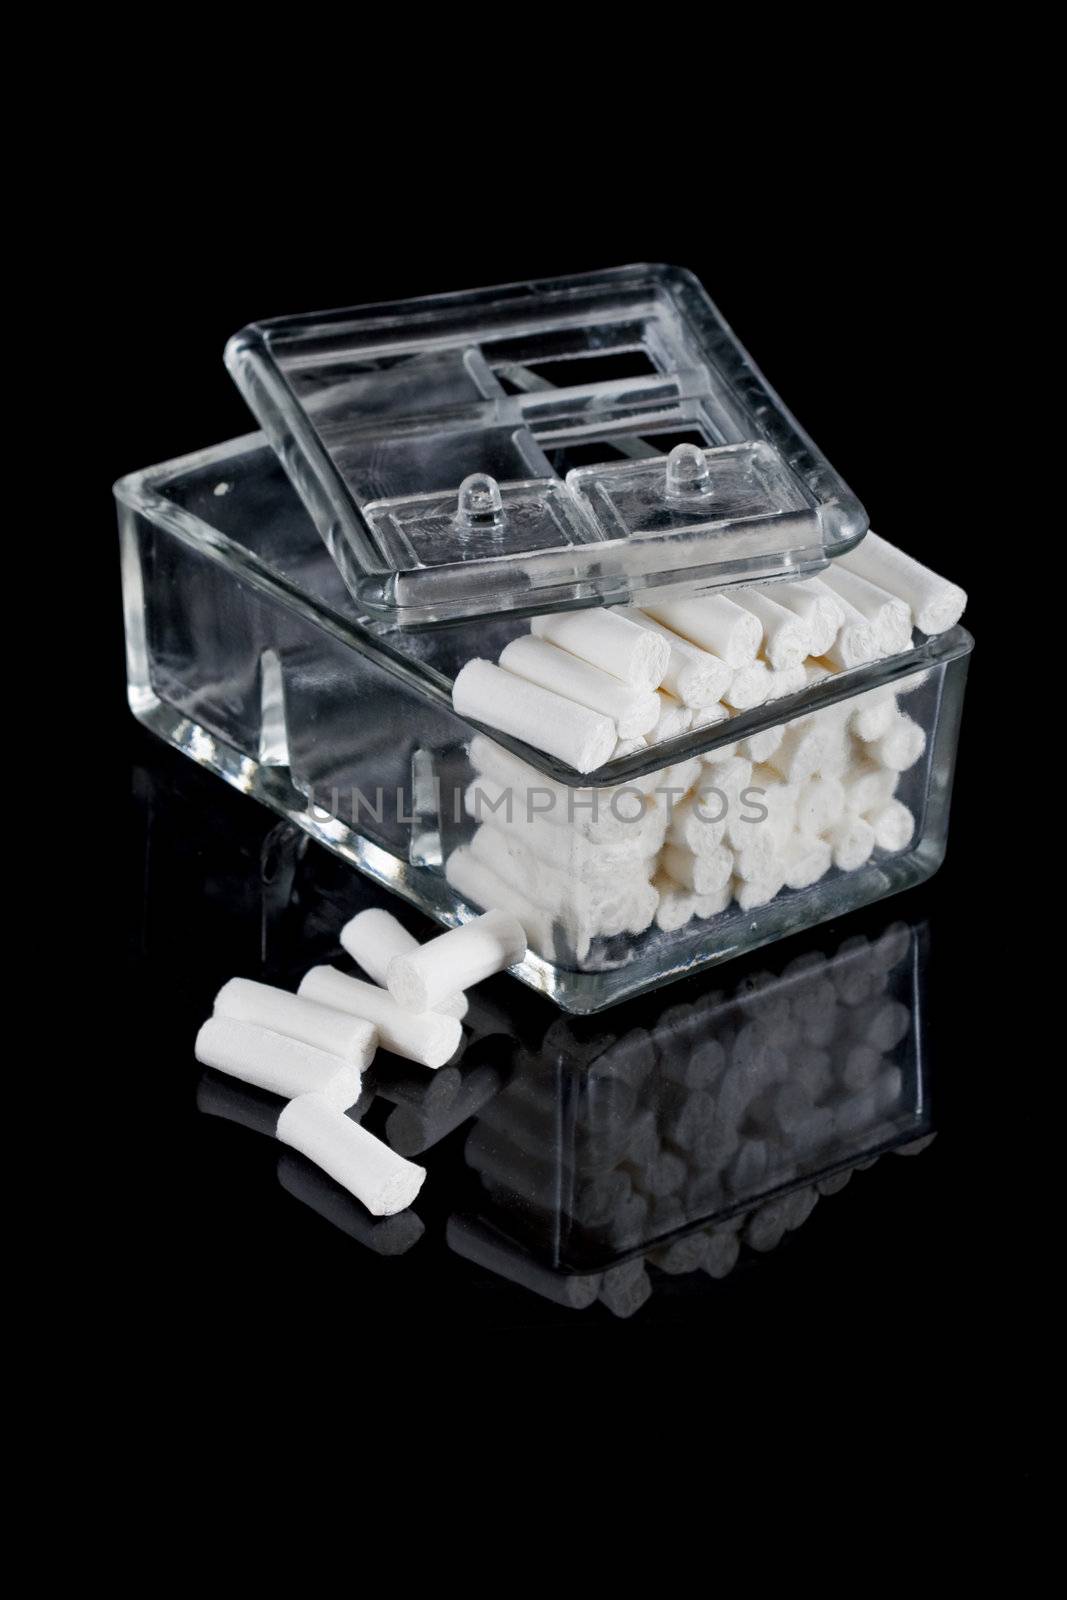 stomatology equipment, round white cotton bars